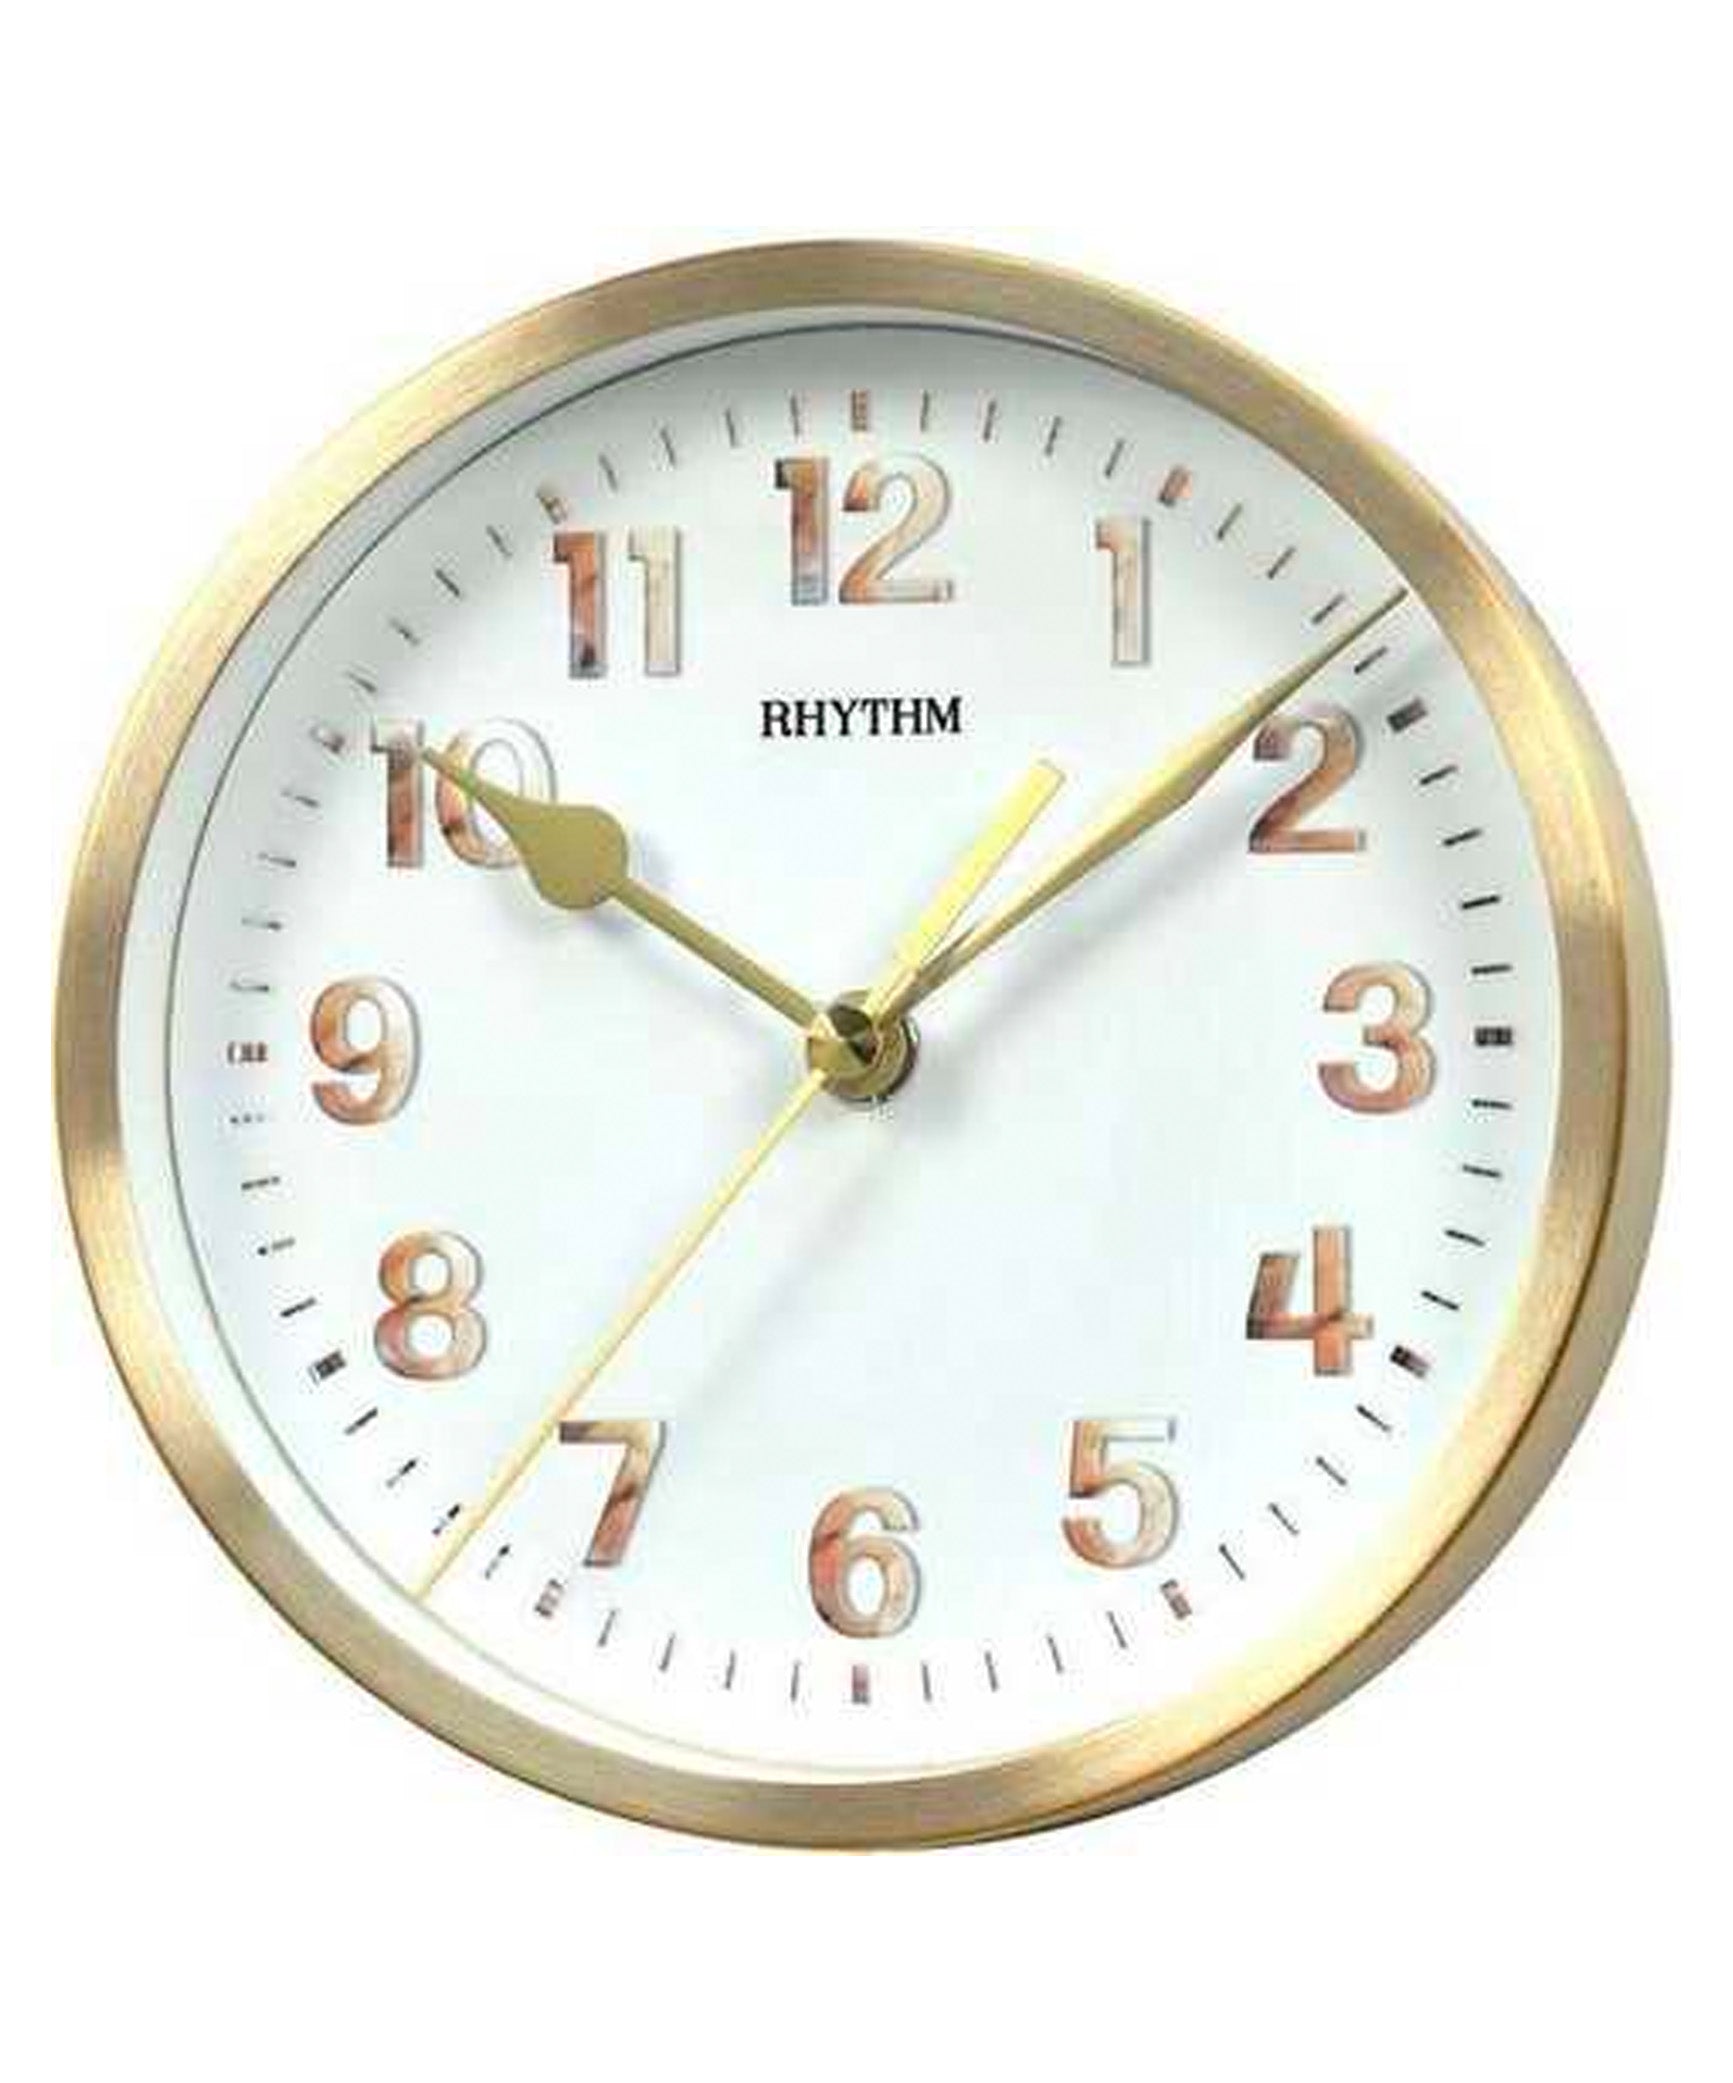 Rhythm Wall Clock Metal Analog CMG532NR18 | stylish watch | accurate timekeeping | wall clock | round clock | Casio watch | wall watch | home décor | timepiece | Halabh.com